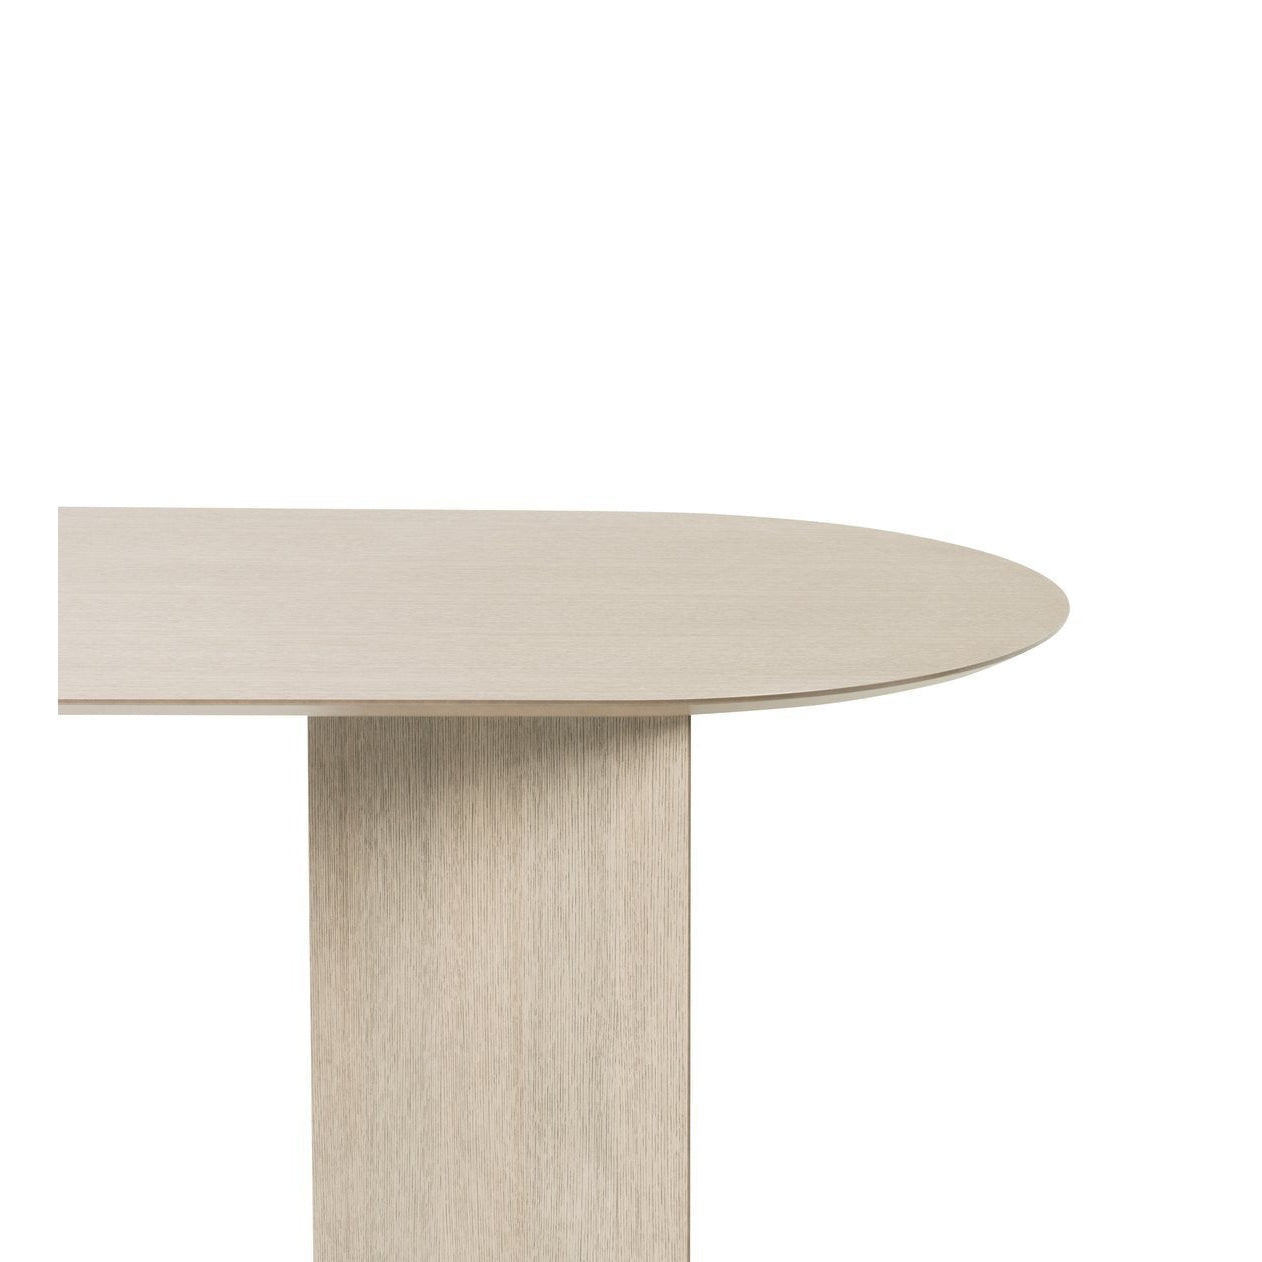 Ferm Living Mingle Table Top Natural Oak Oval, 220 cm